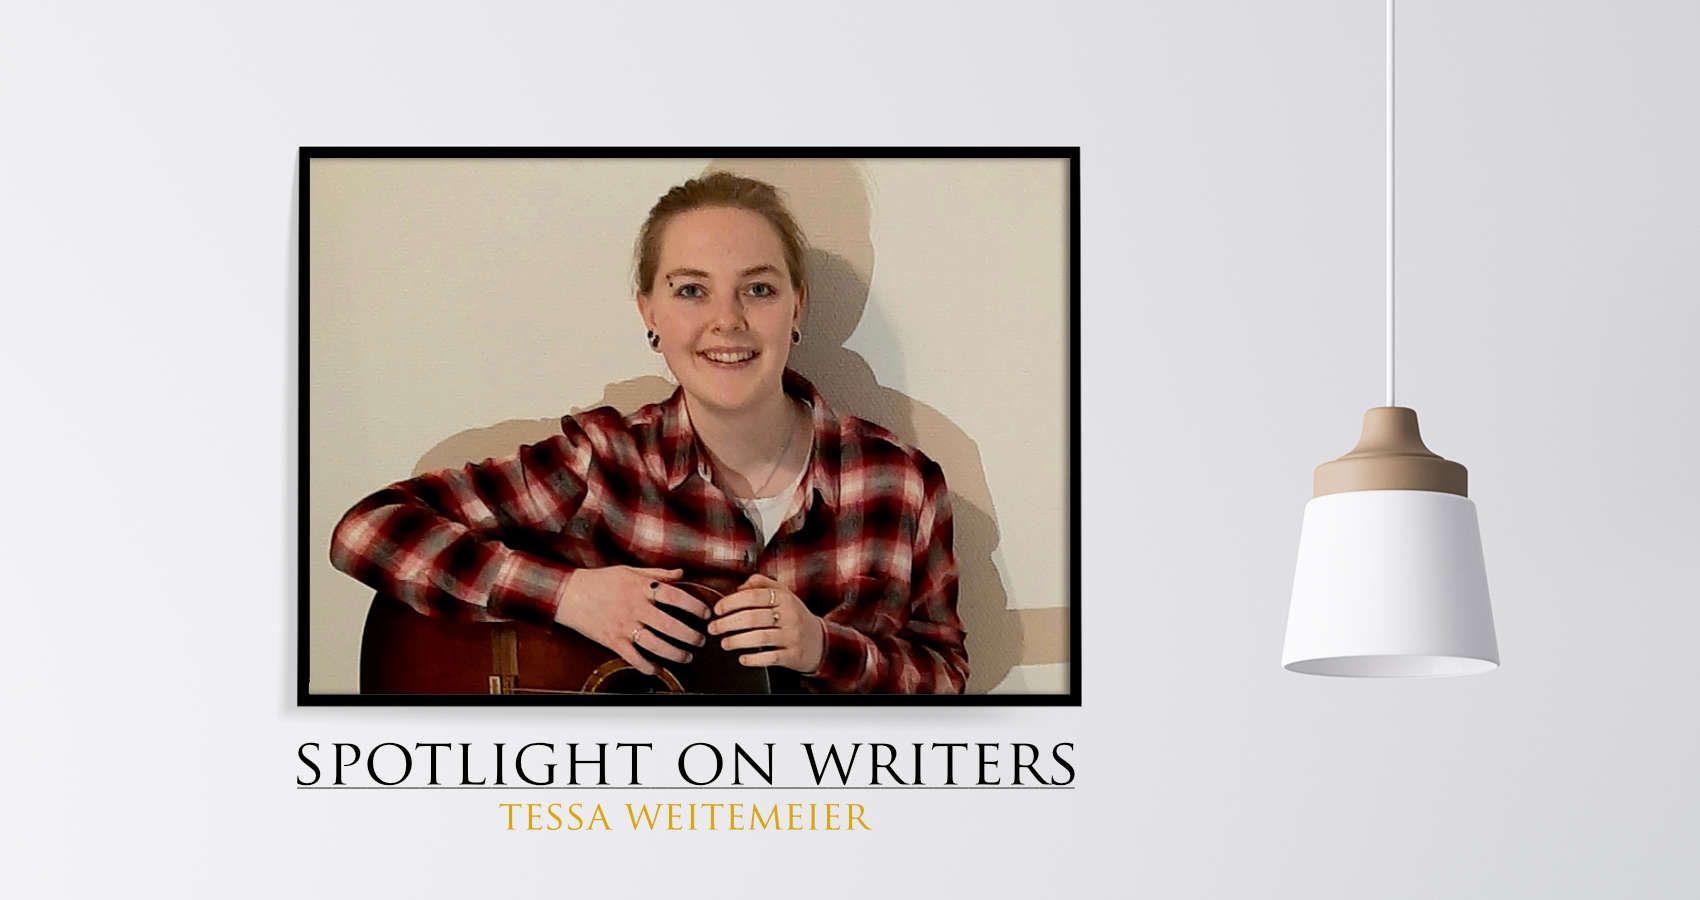 Spotlight On Writers - Tessa Weitemeier, interview at Spillwords.com